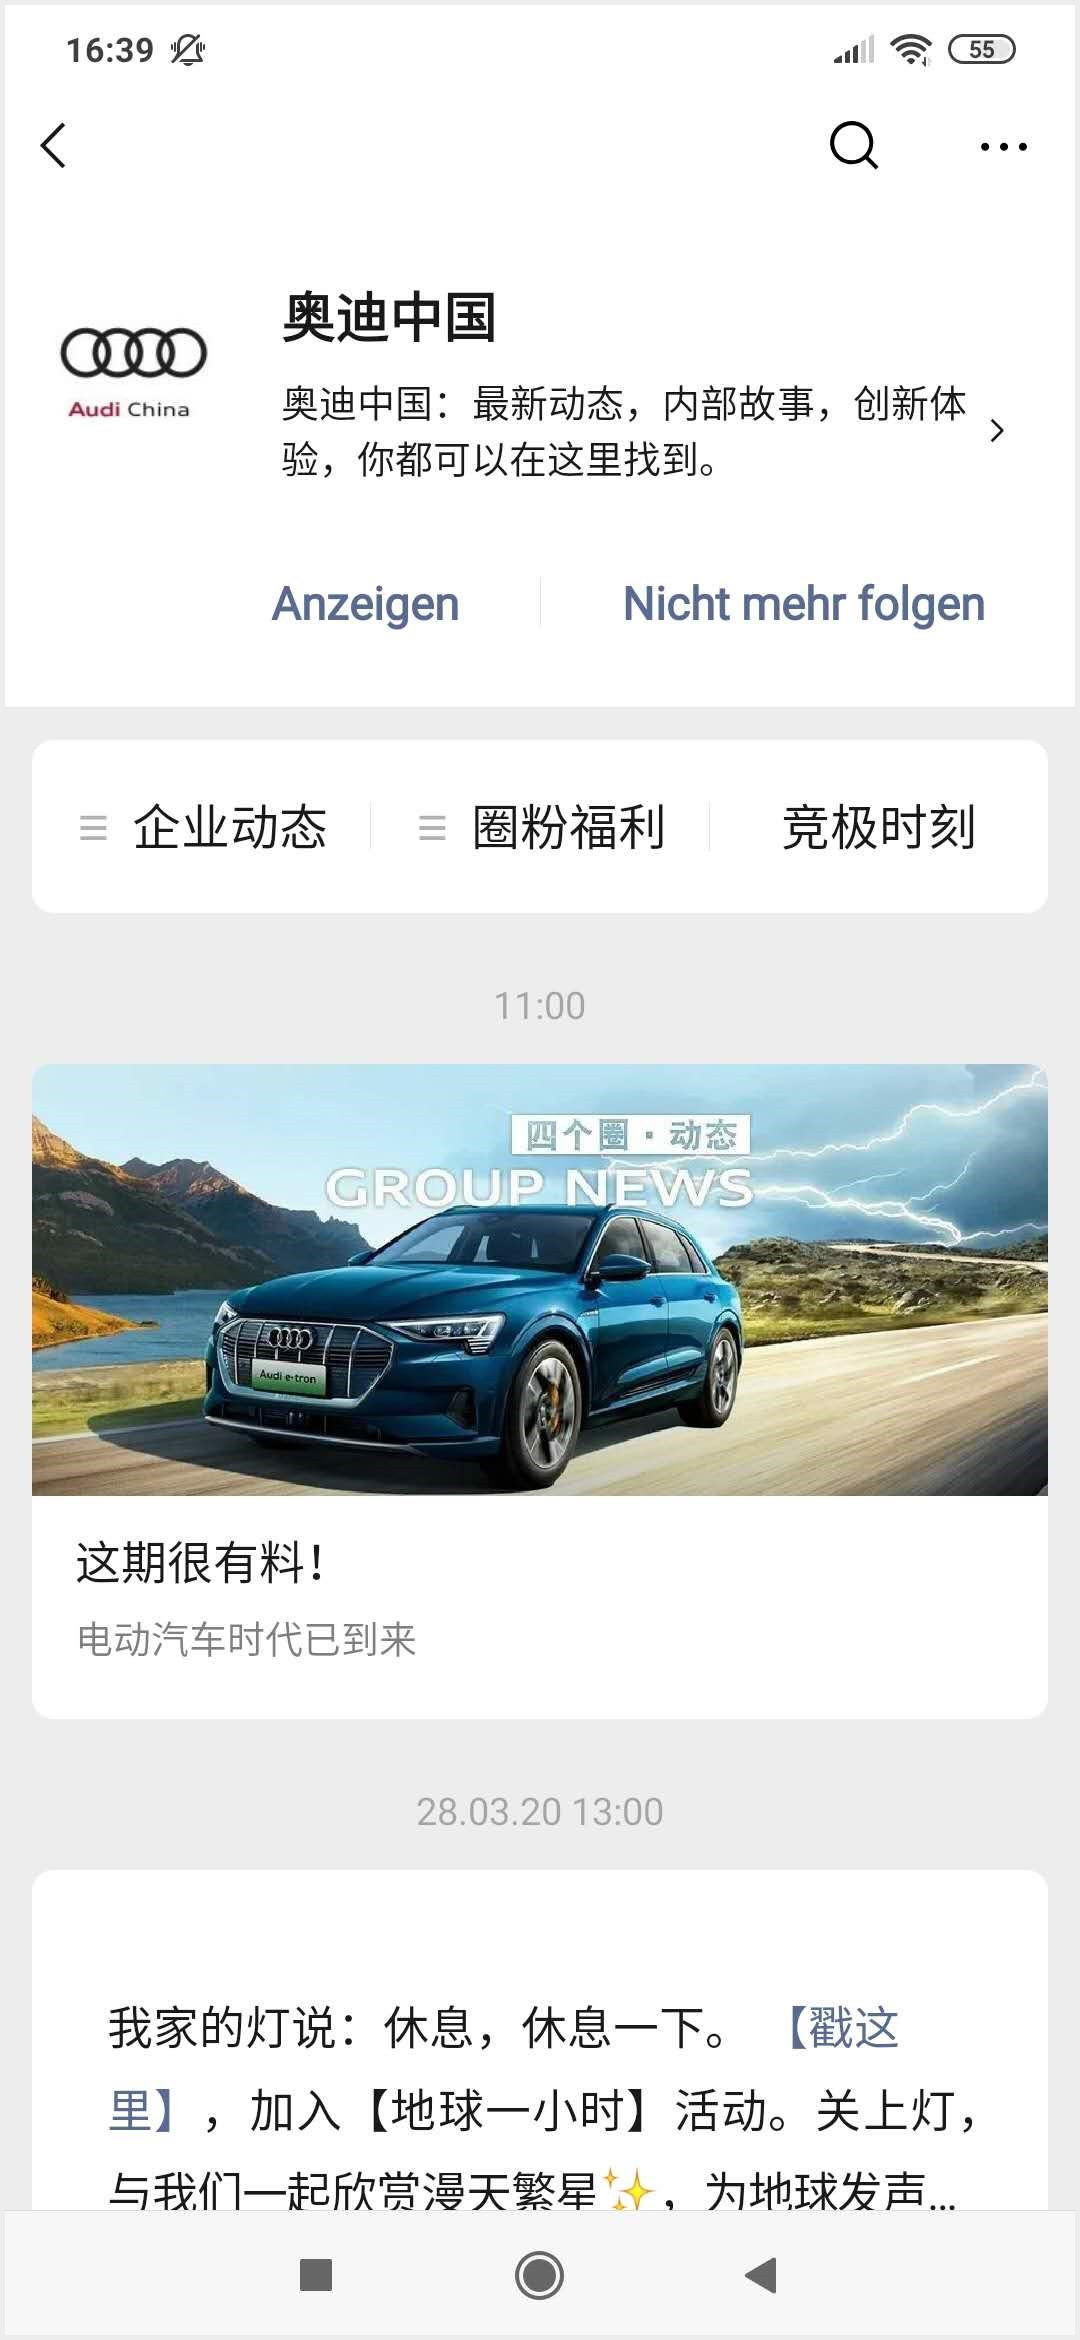 WeChat Audi China Account